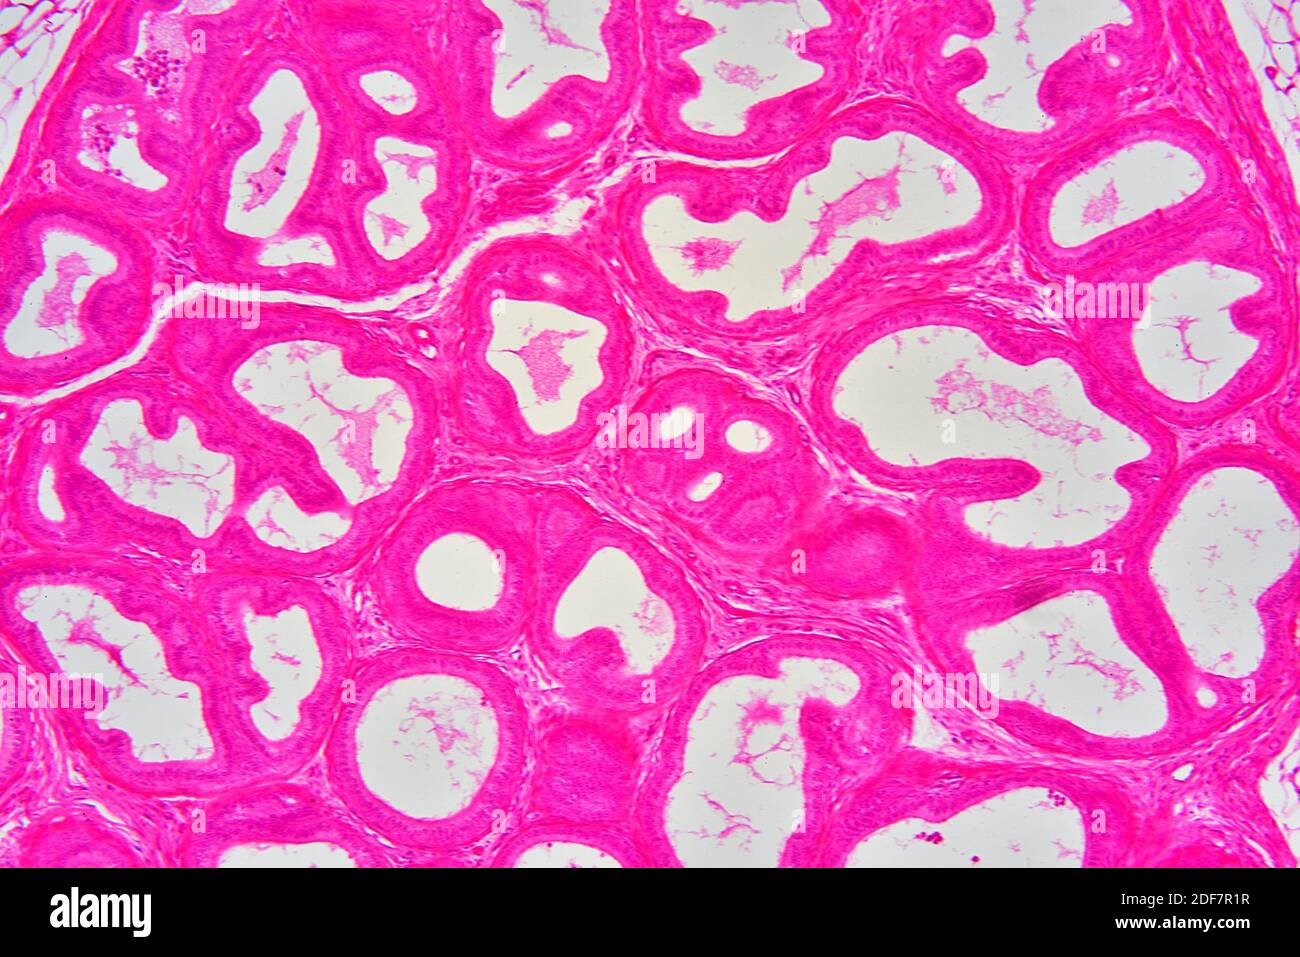 Human epididymis. X75 at 10 cm wide. Stock Photo